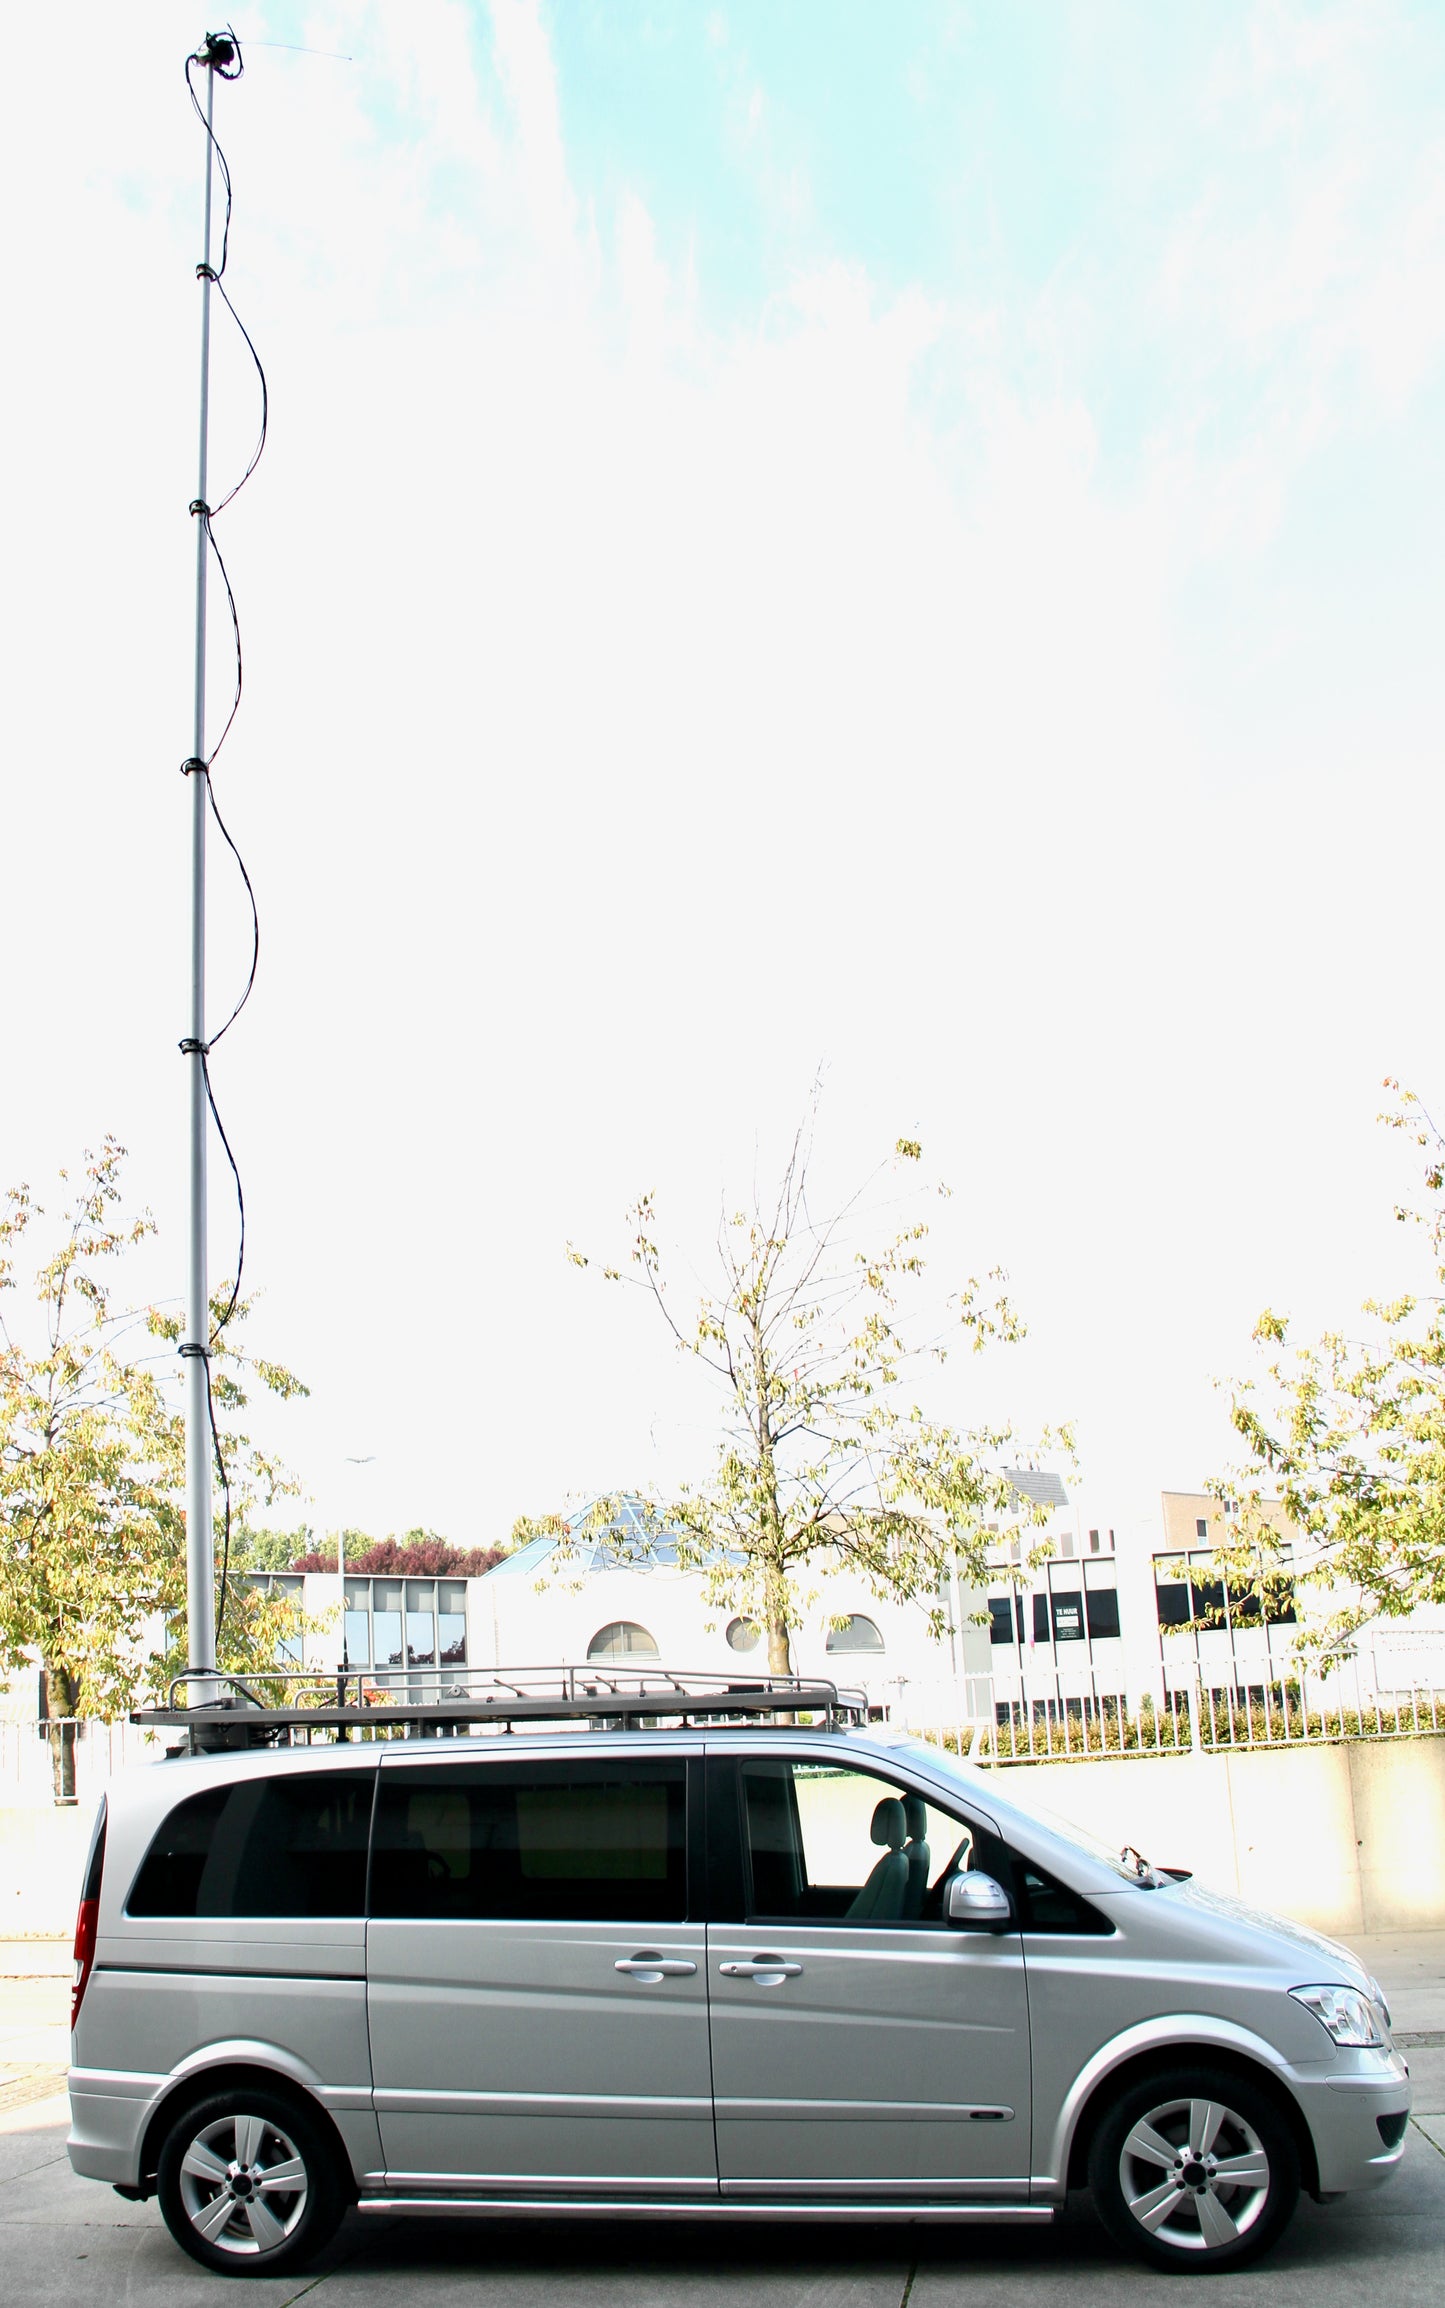 Mercedes-Benz VIANO OB VAN Rack Ready with 9 meter hydraulic antenna